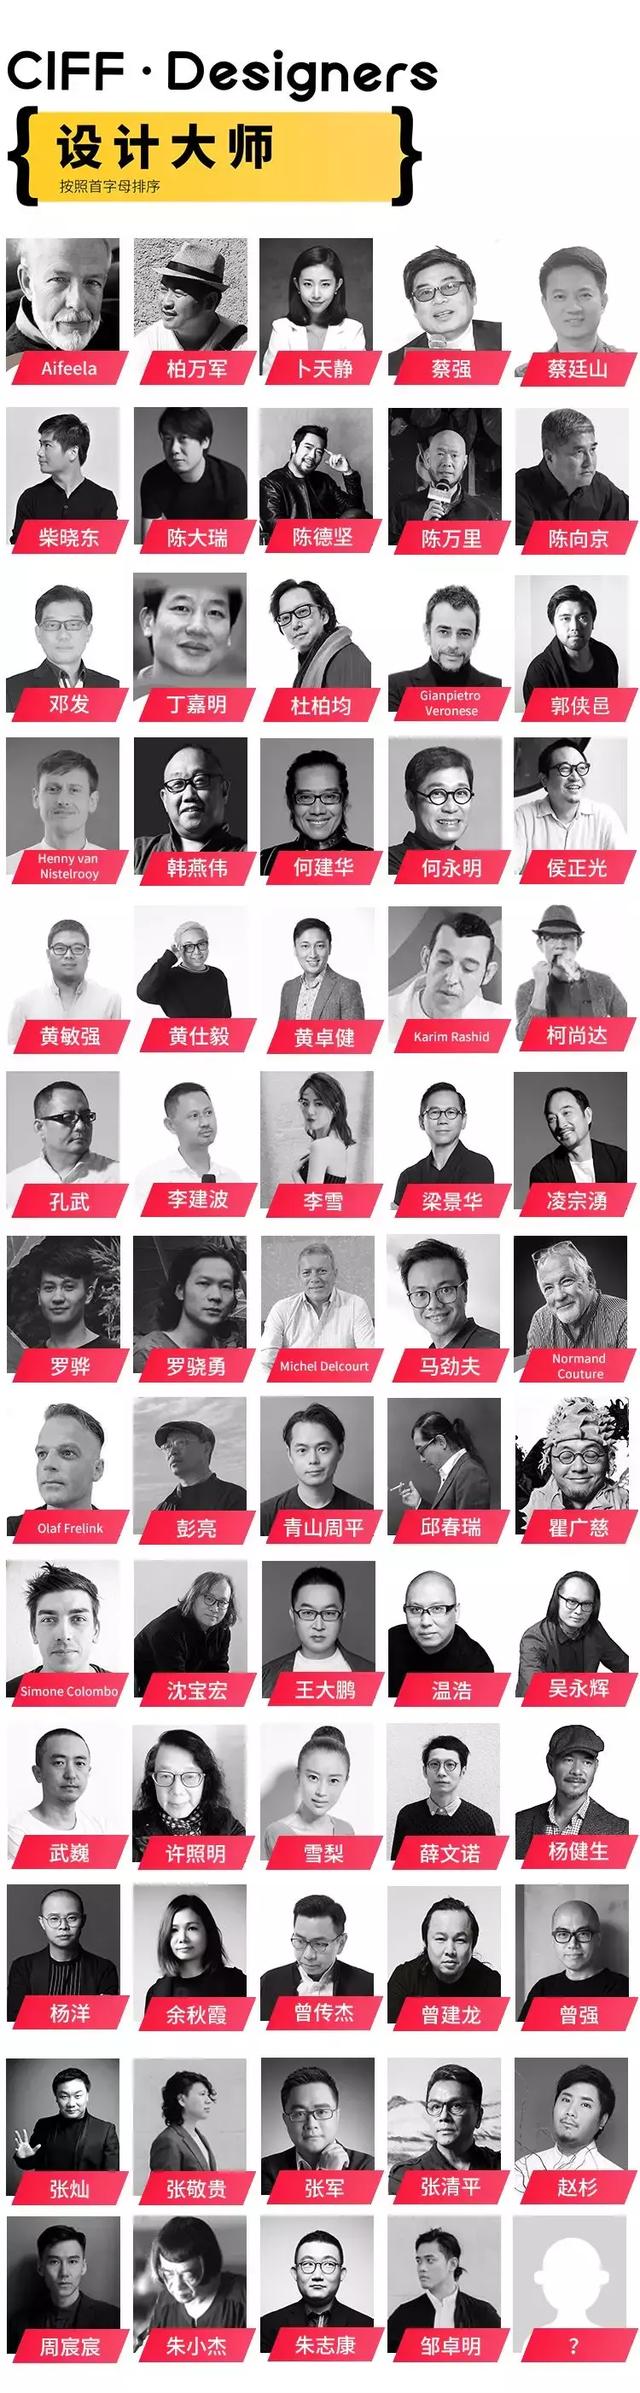 CIFF Guangzhou 精彩提前看 | 讓你的創想領先一整年的設計盛會